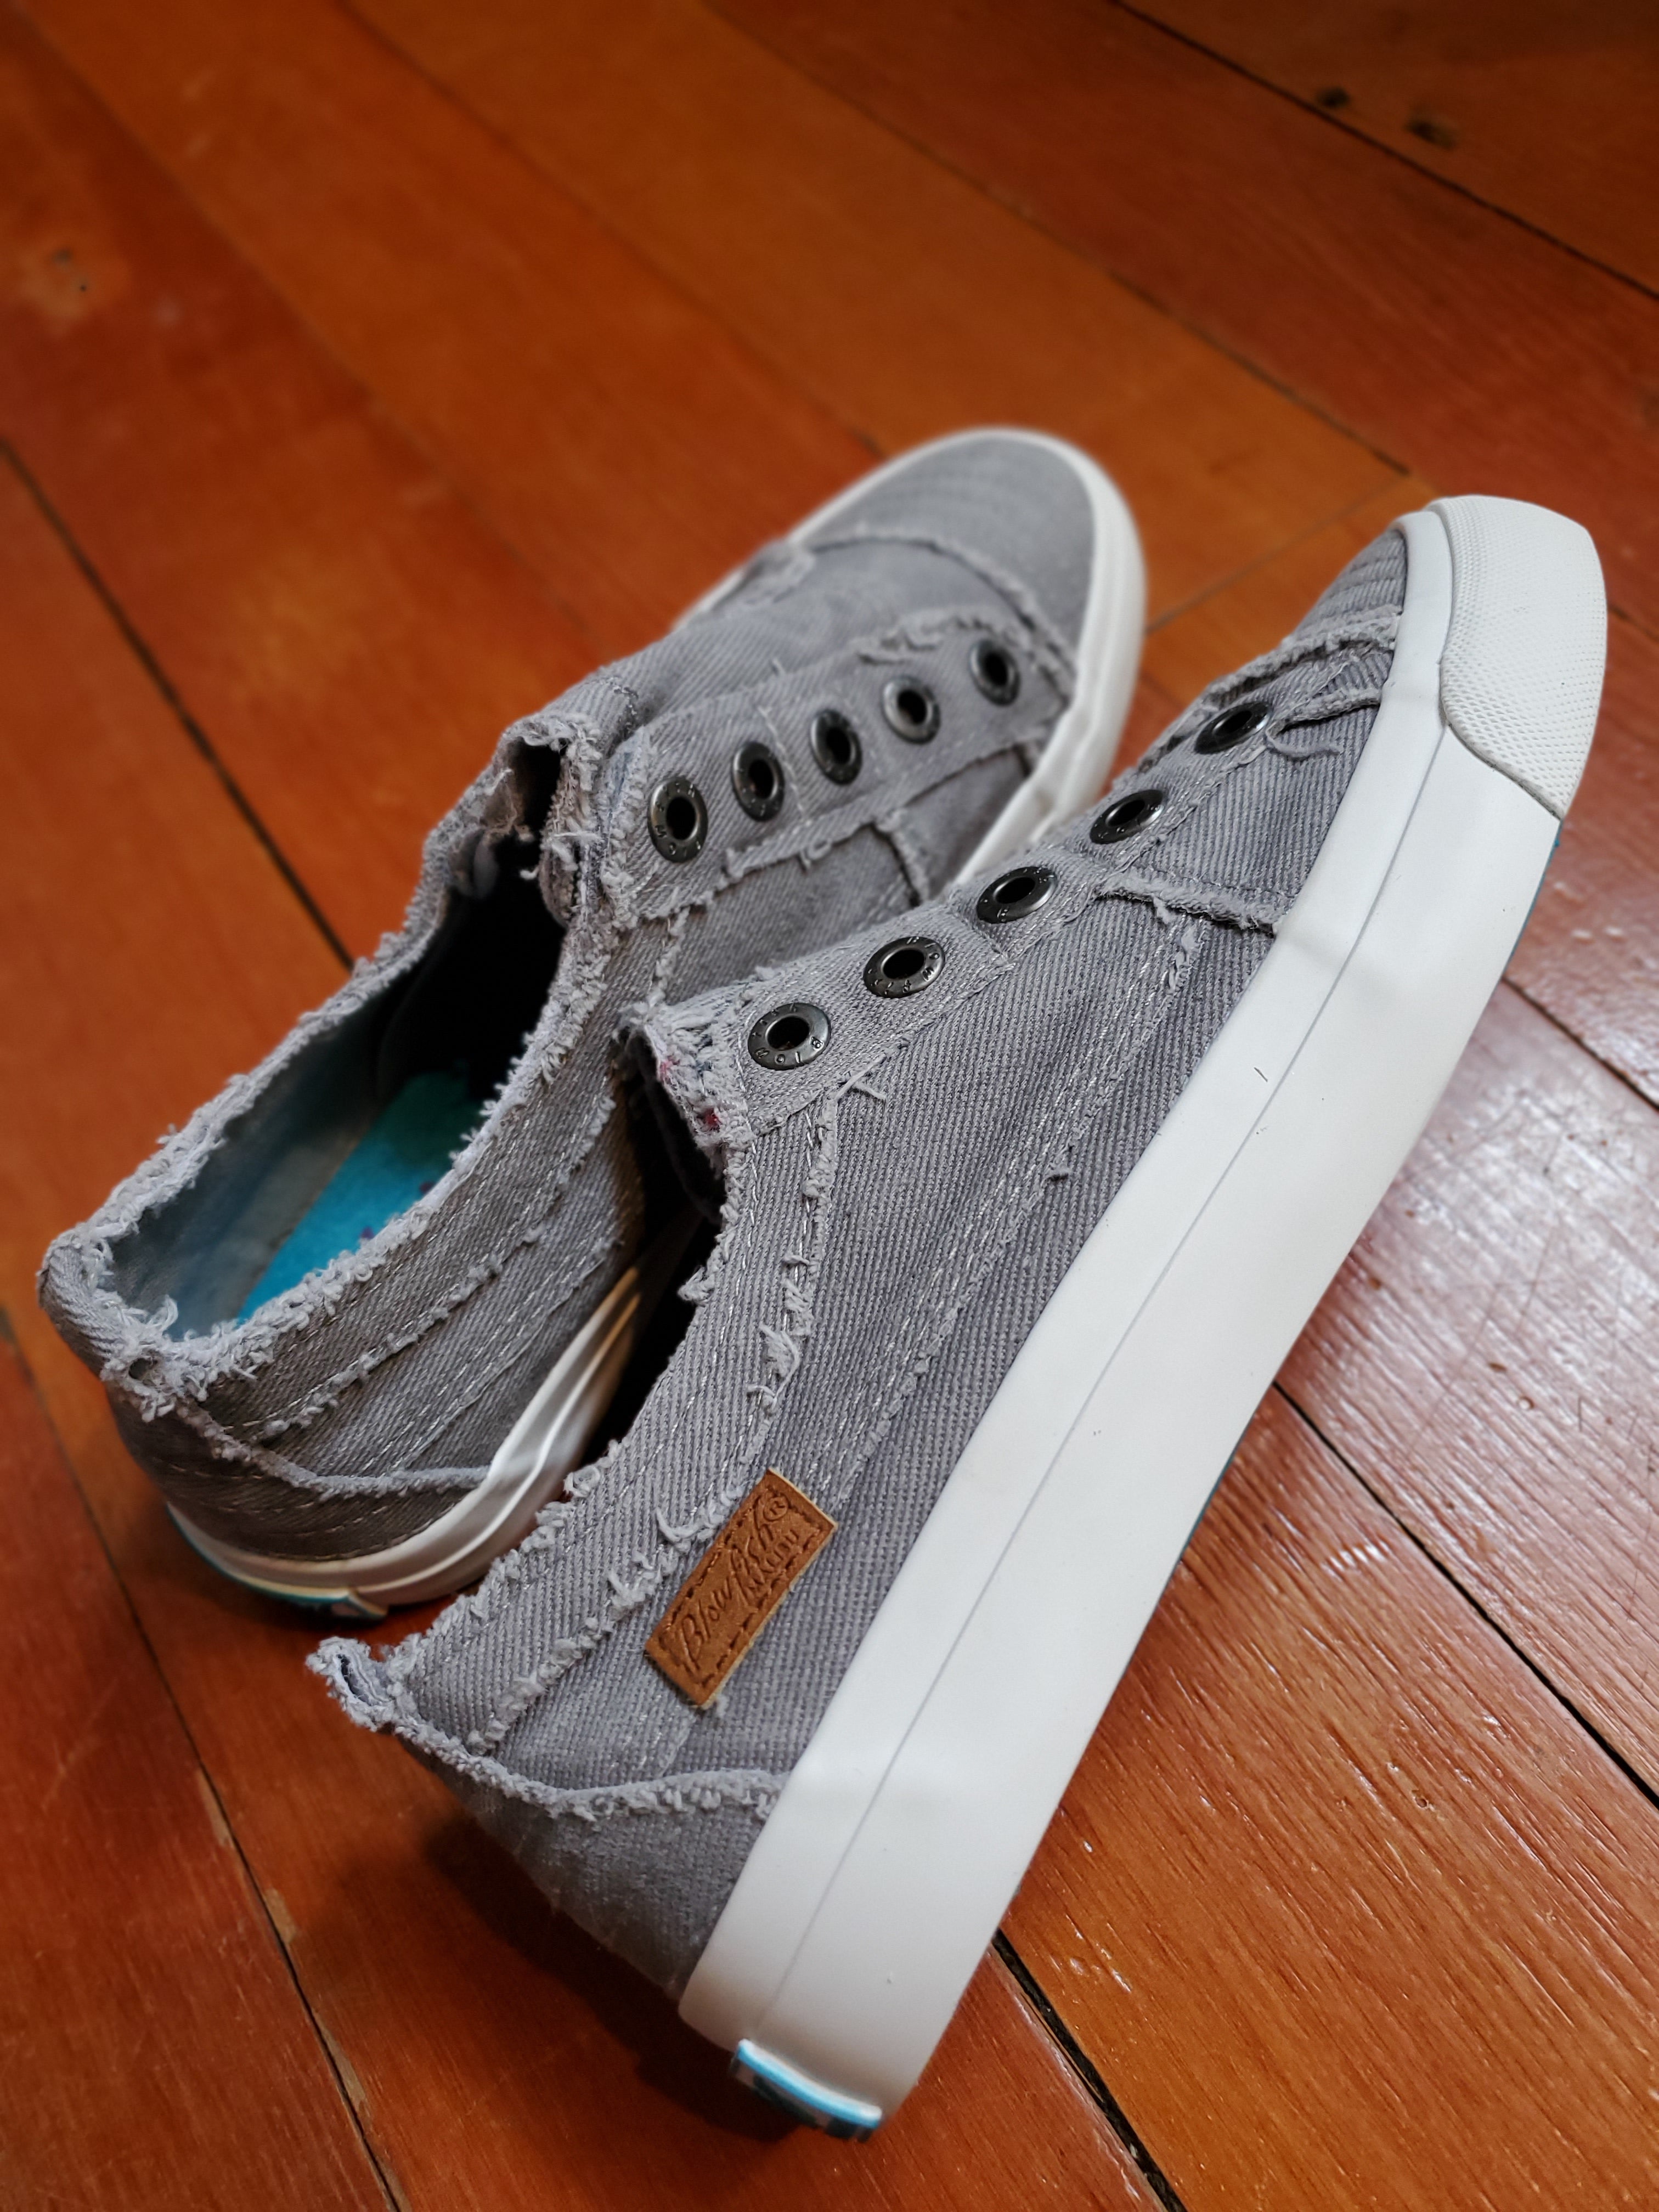 Blowfish Play Sneakers in Light Gray